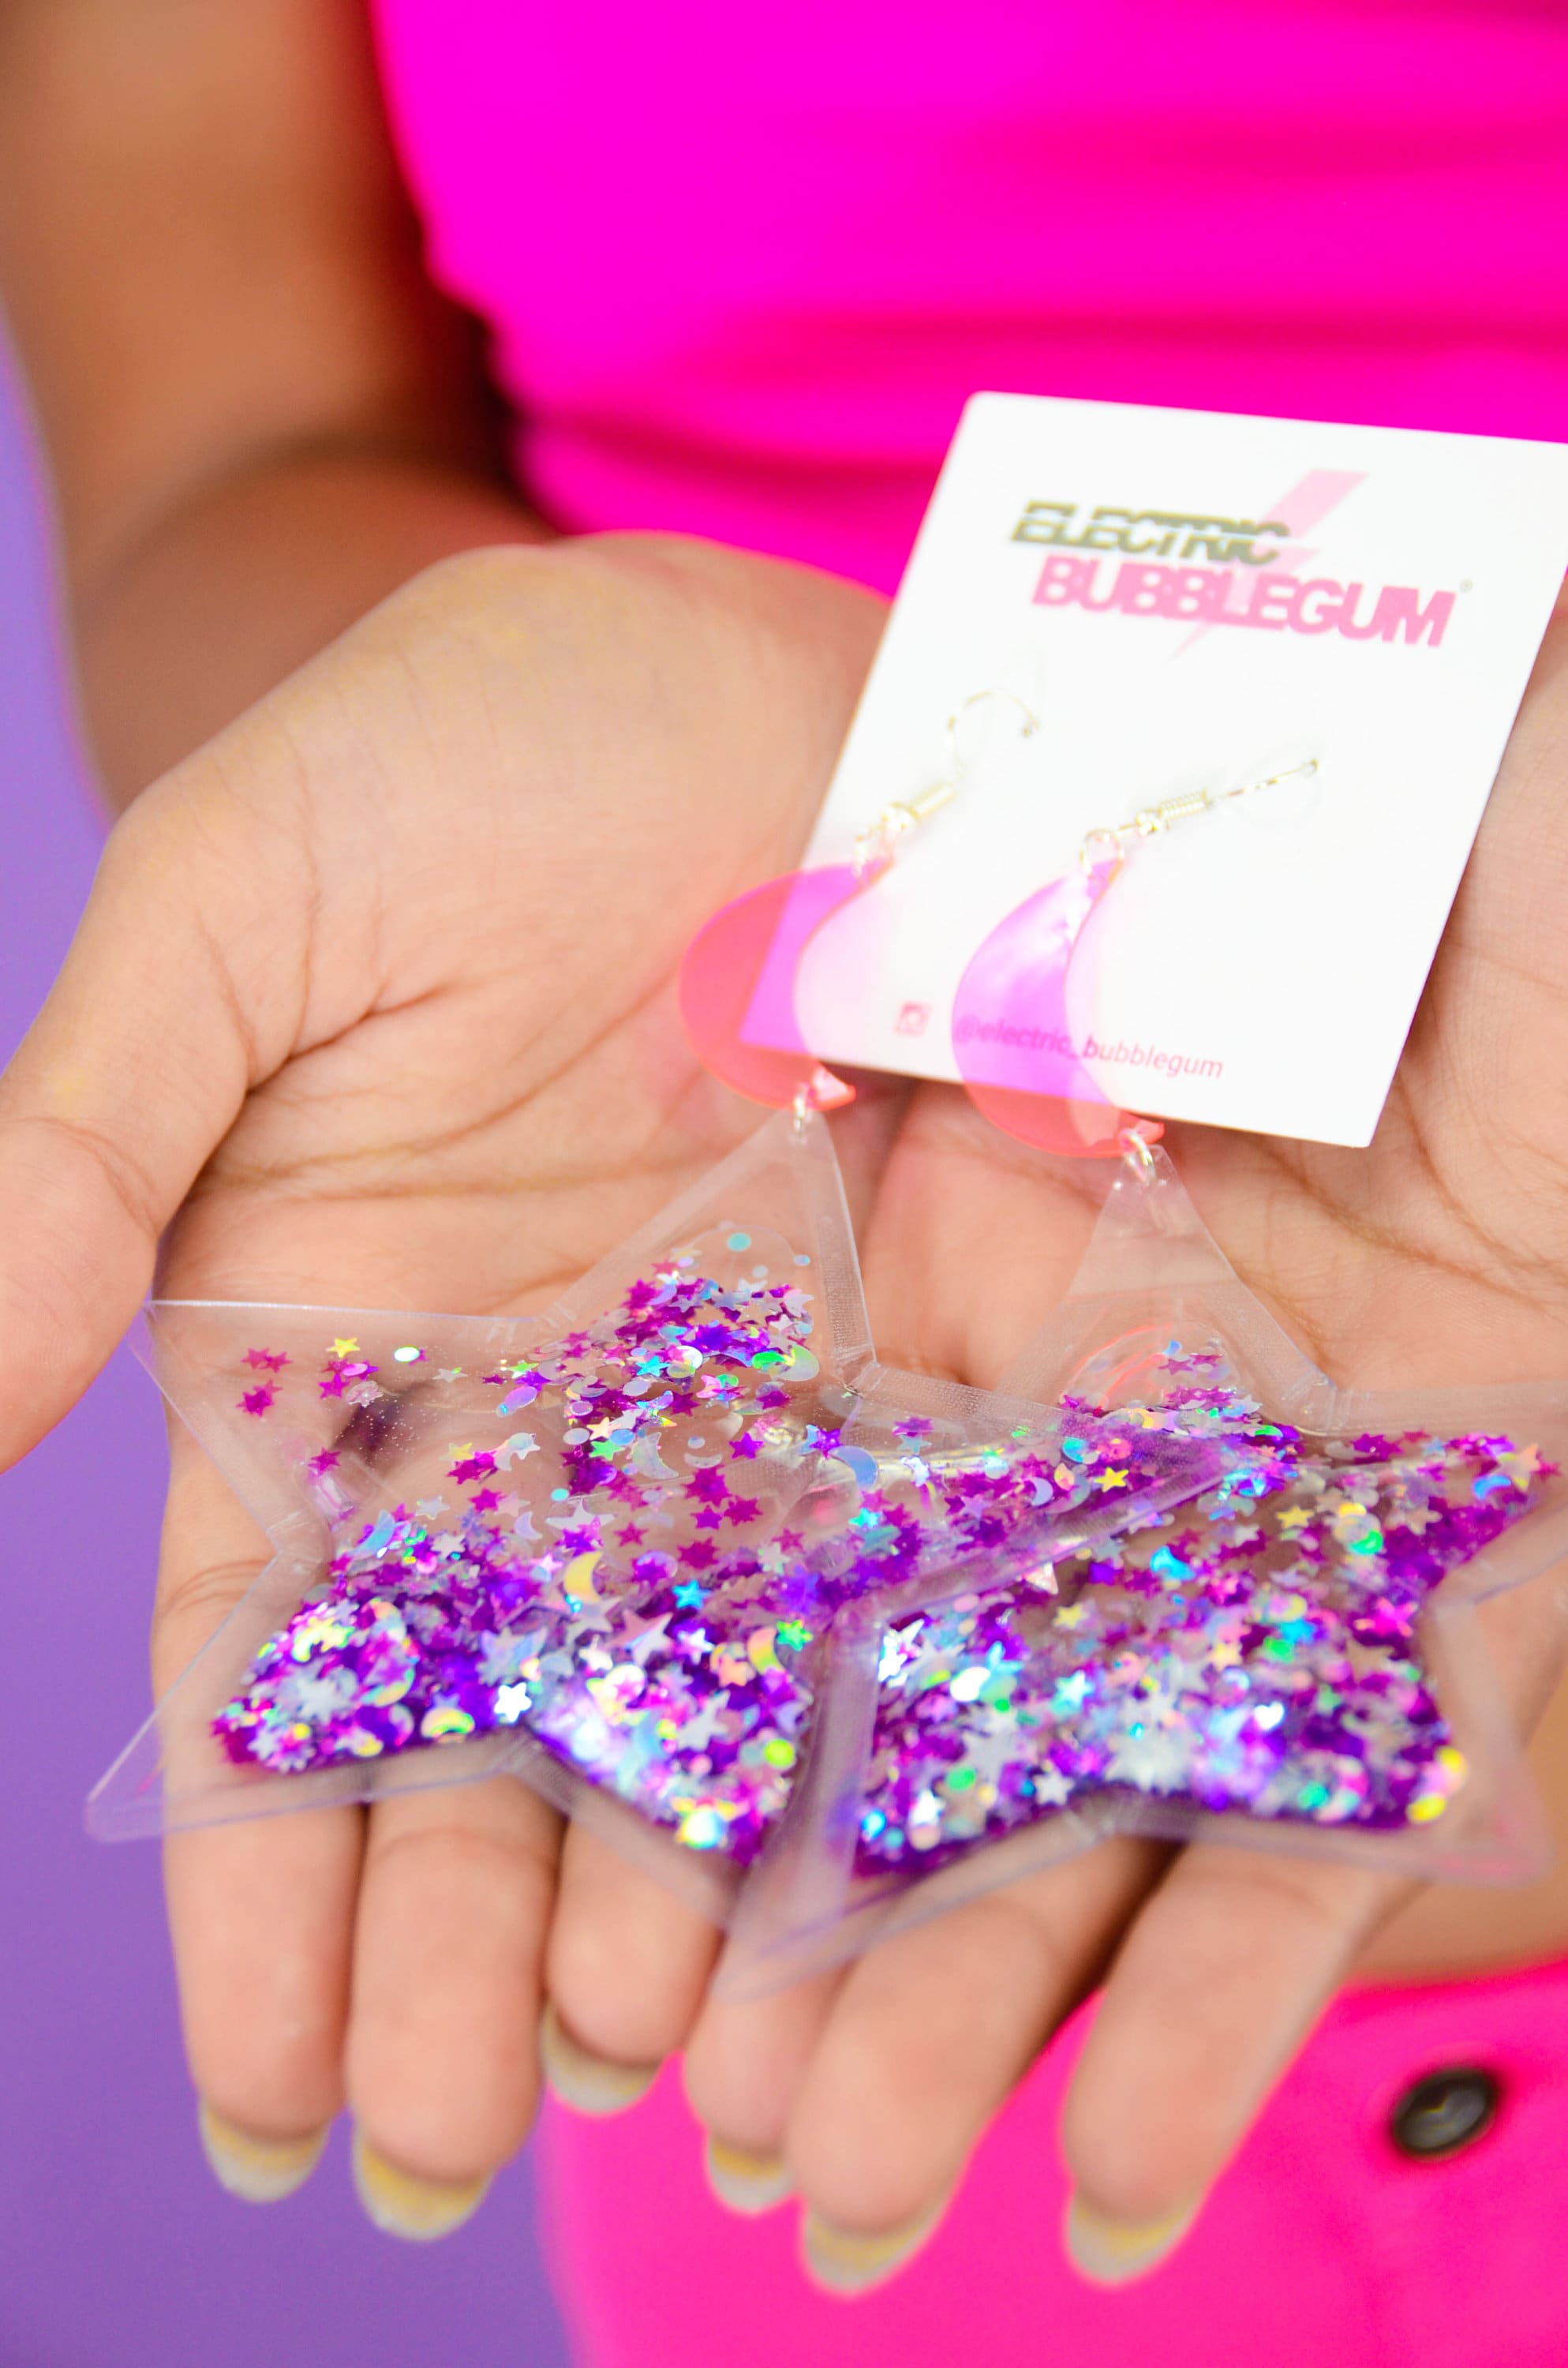 Liquid Glitter Star Earrings - Starlit Cowgirl - Electric Bubblegum